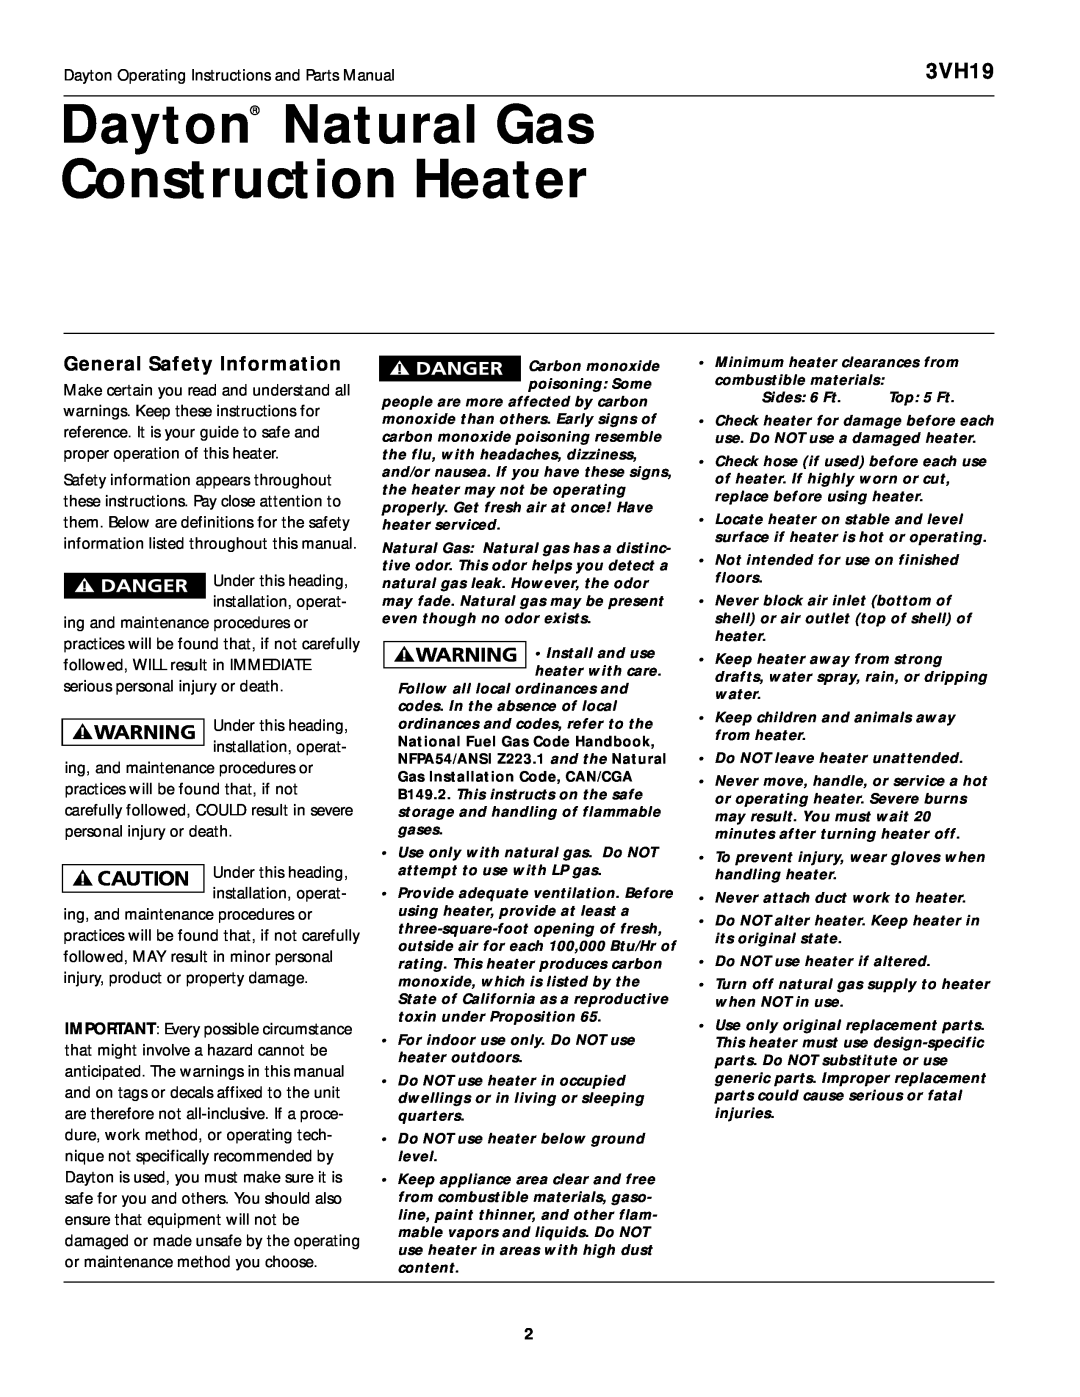 Dayton 3VH19 manual Dayton Natural Gas Construction Heater, General Safety Information 